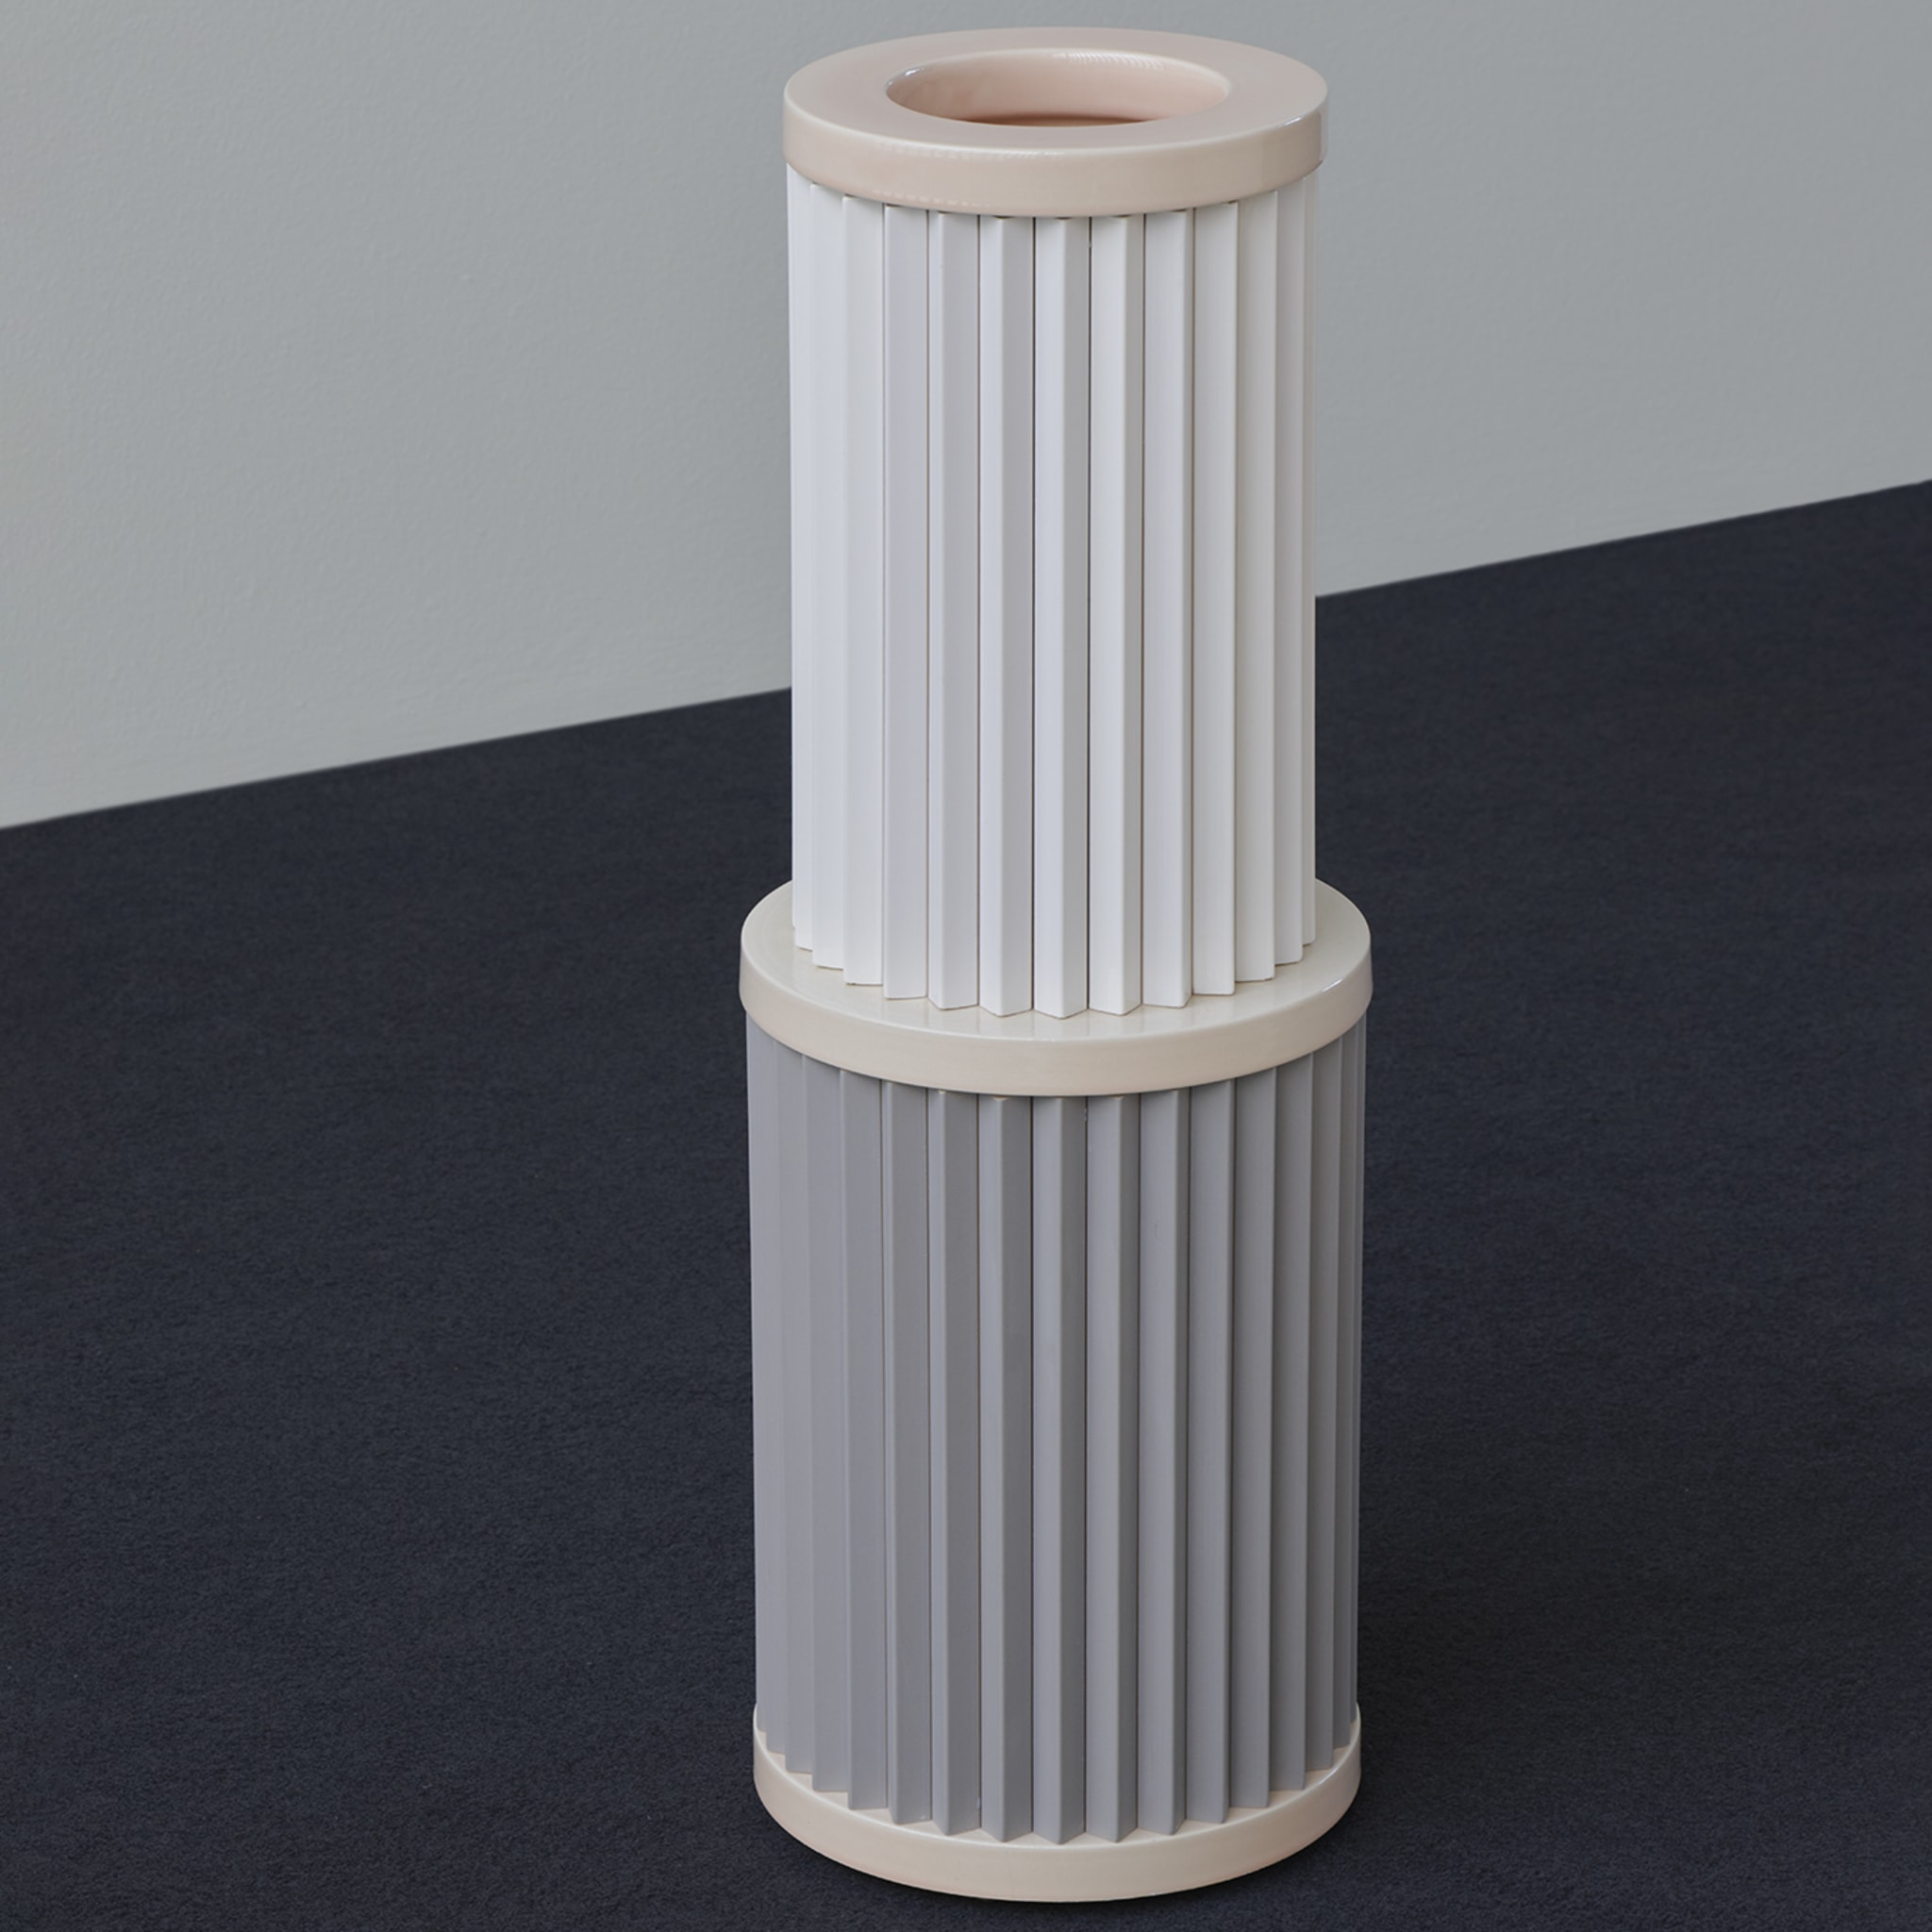 Rombini C White and Gray Vase by Ronan & Erwan Bouroullec - Alternative view 2